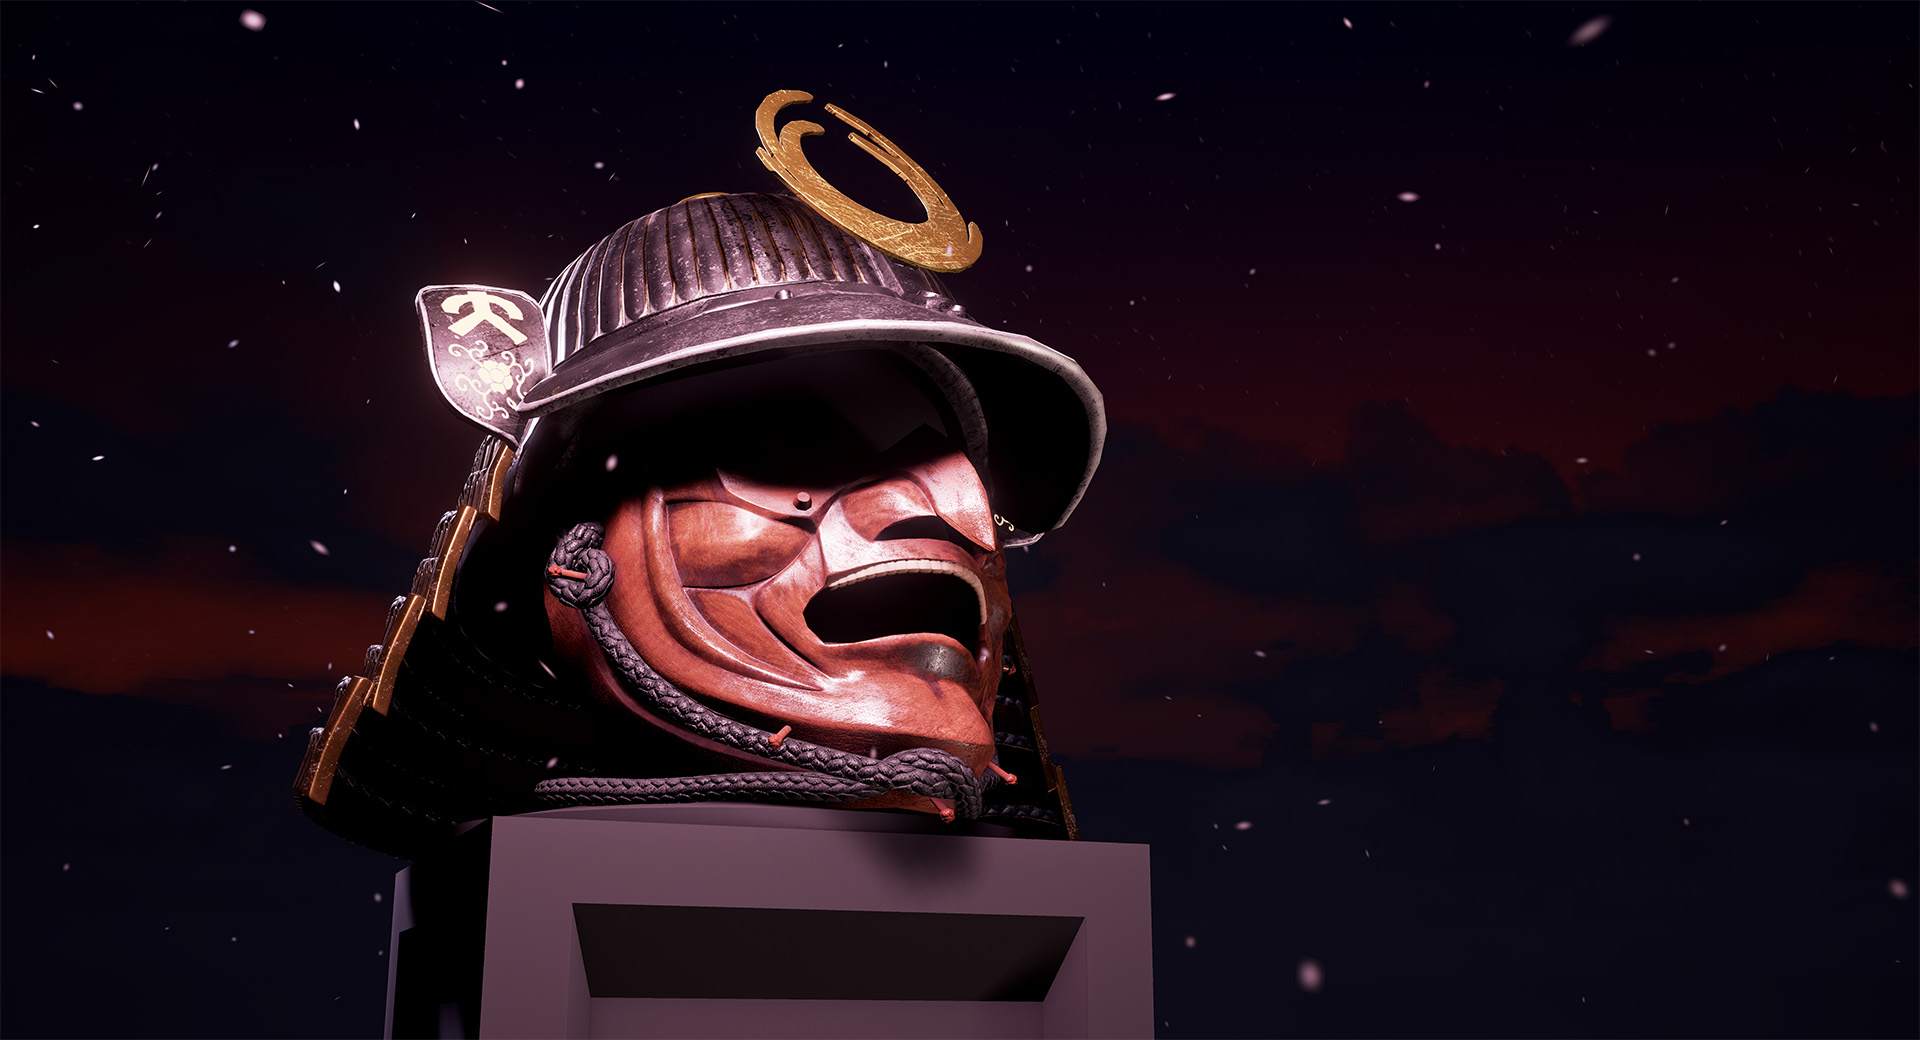 pbr kabuto samurai helmet unreal engine 4 render screenshot